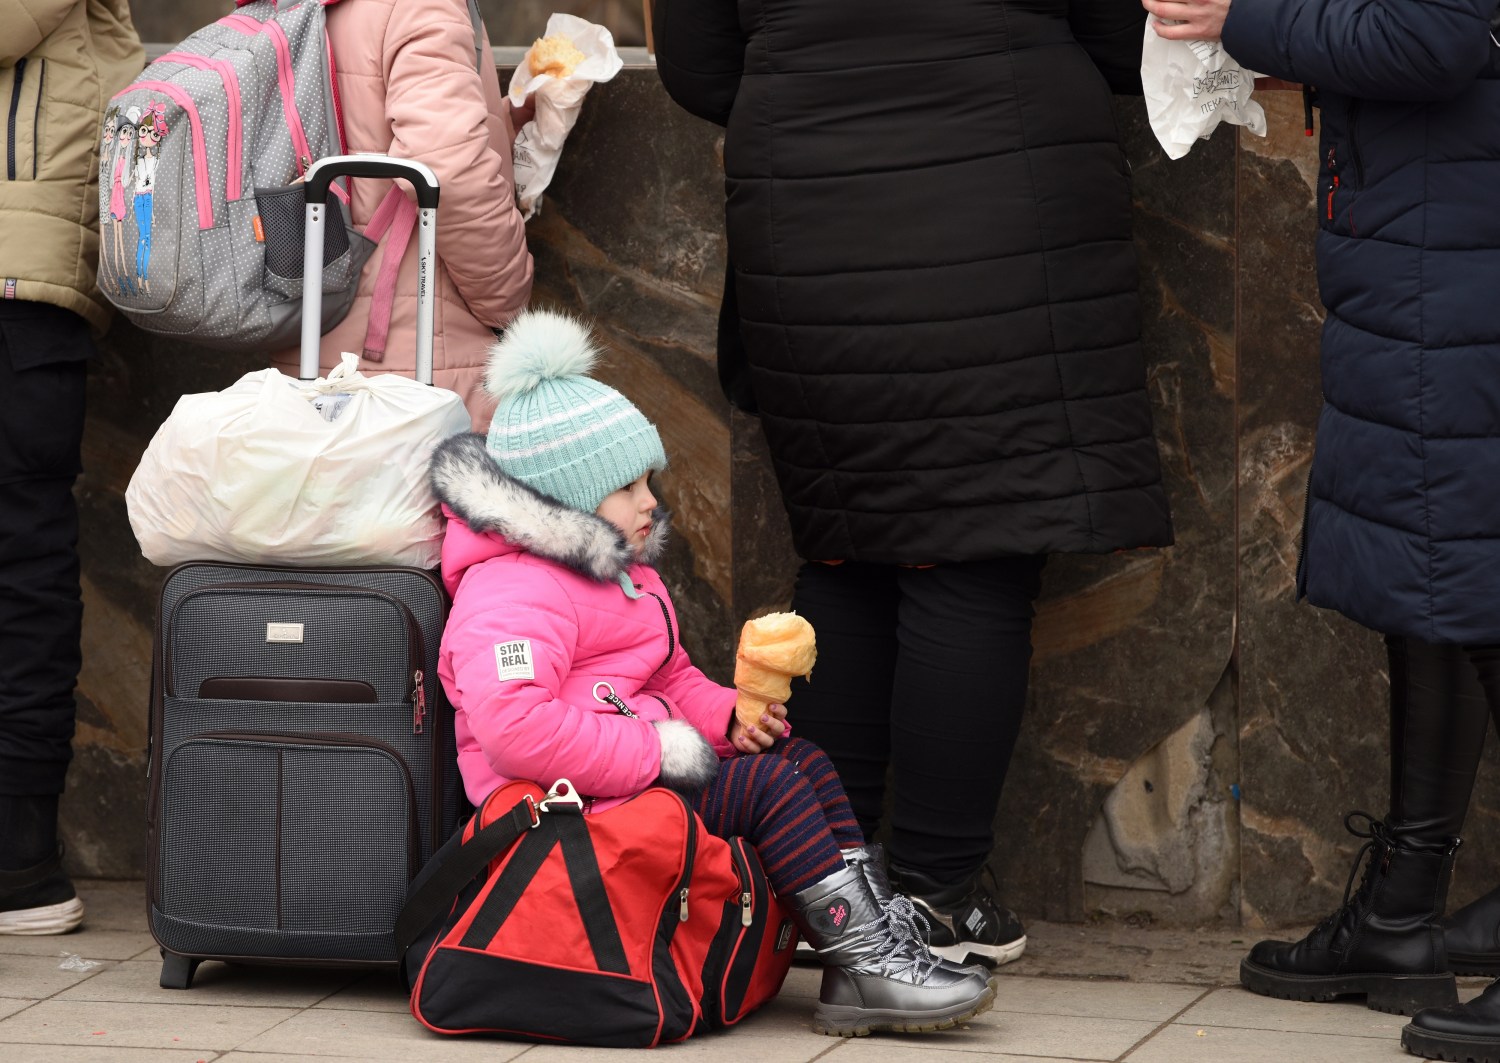 Ukrainian children sitting by suitcase after evacuating Eastern Ukraine.